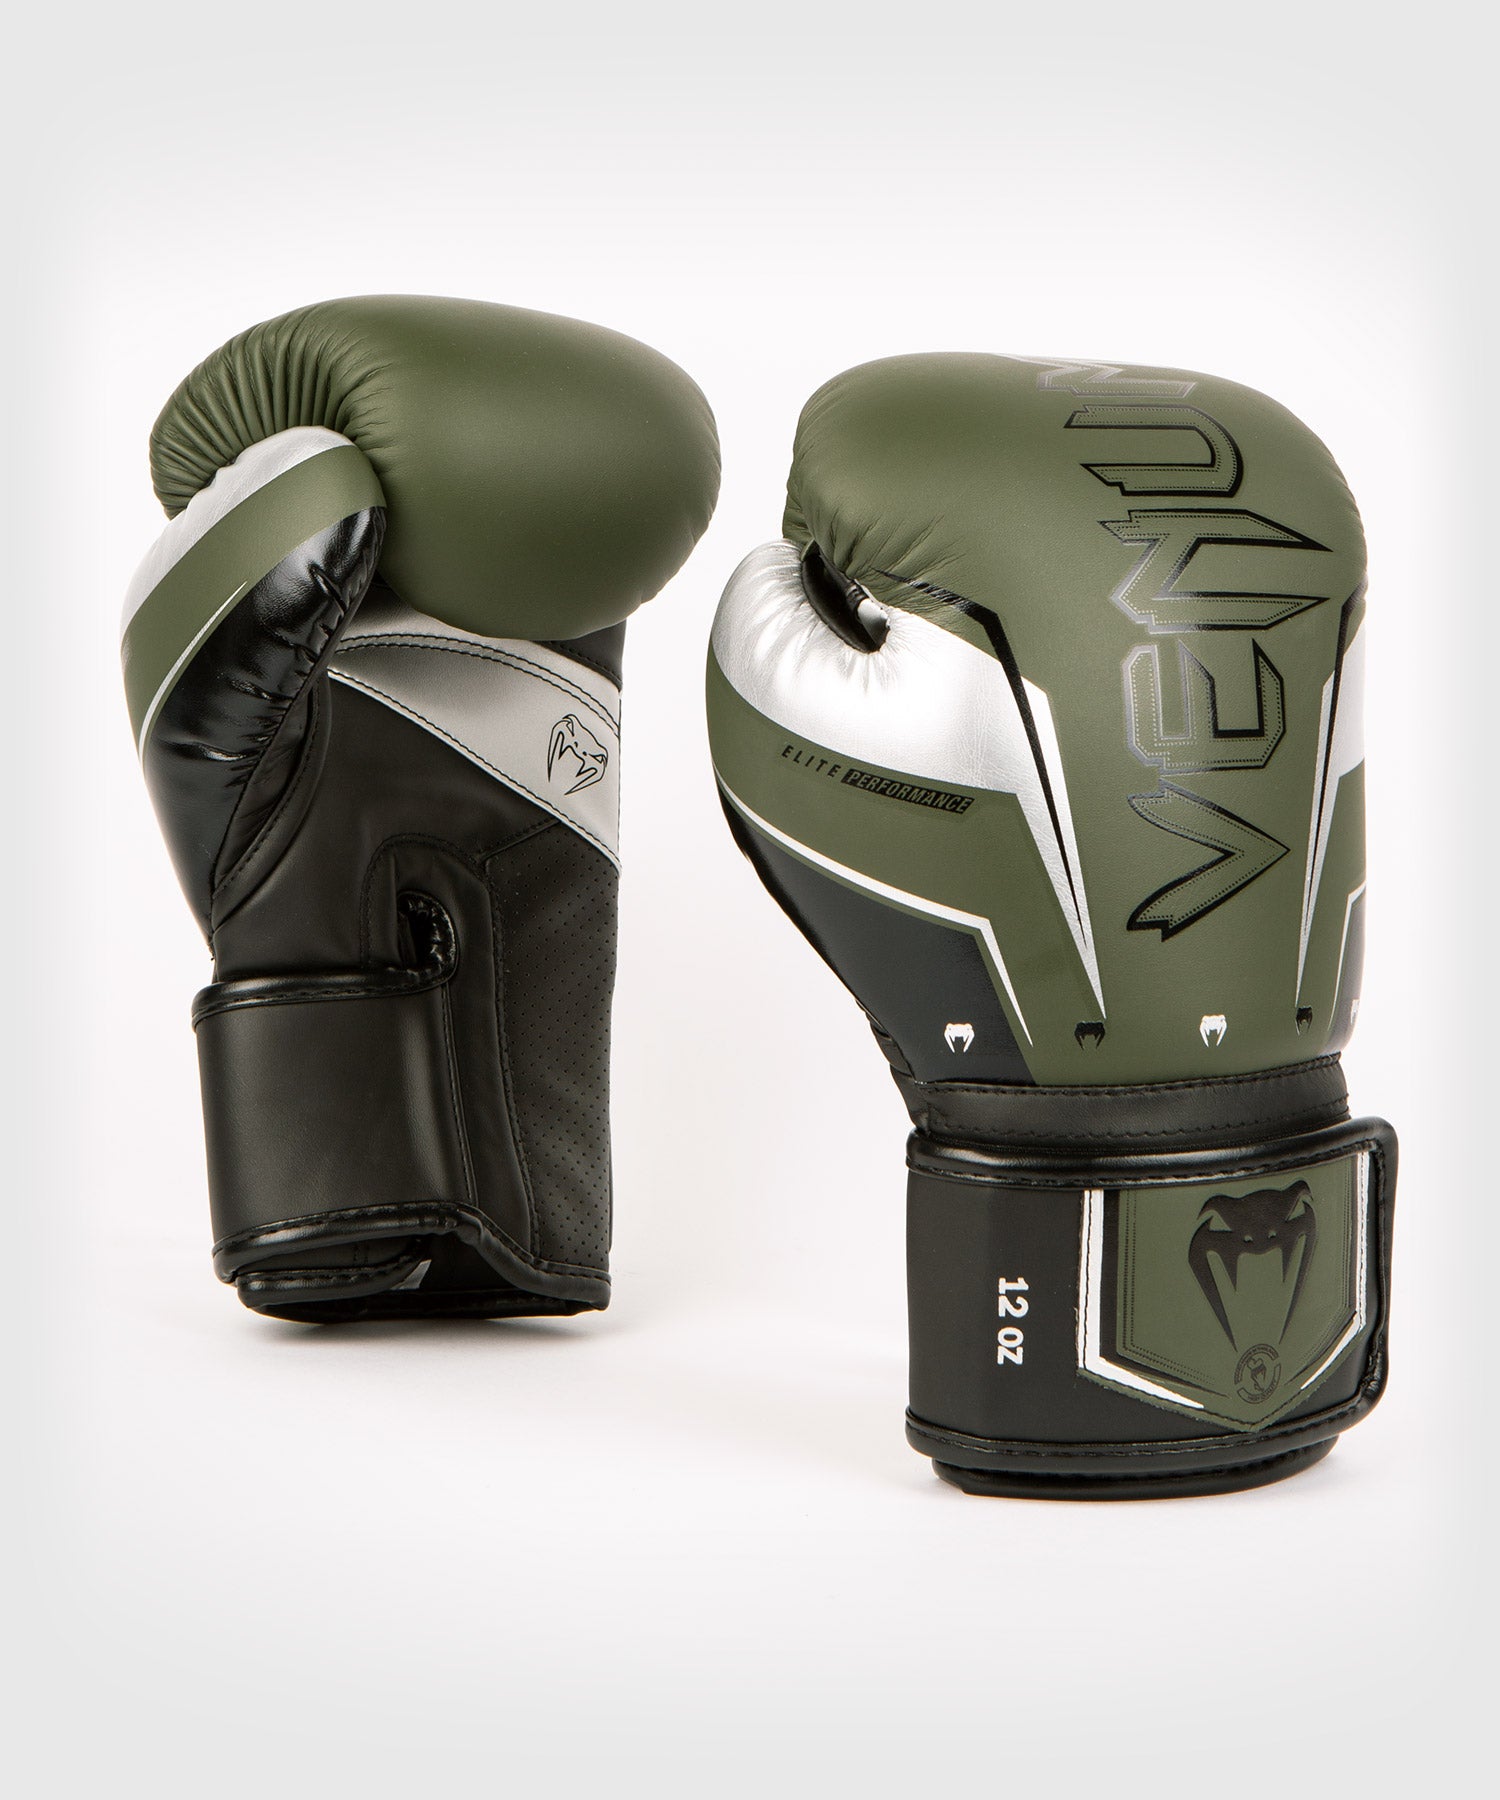 Gants de boxe Venum Elite EVO -  – Combat Arena